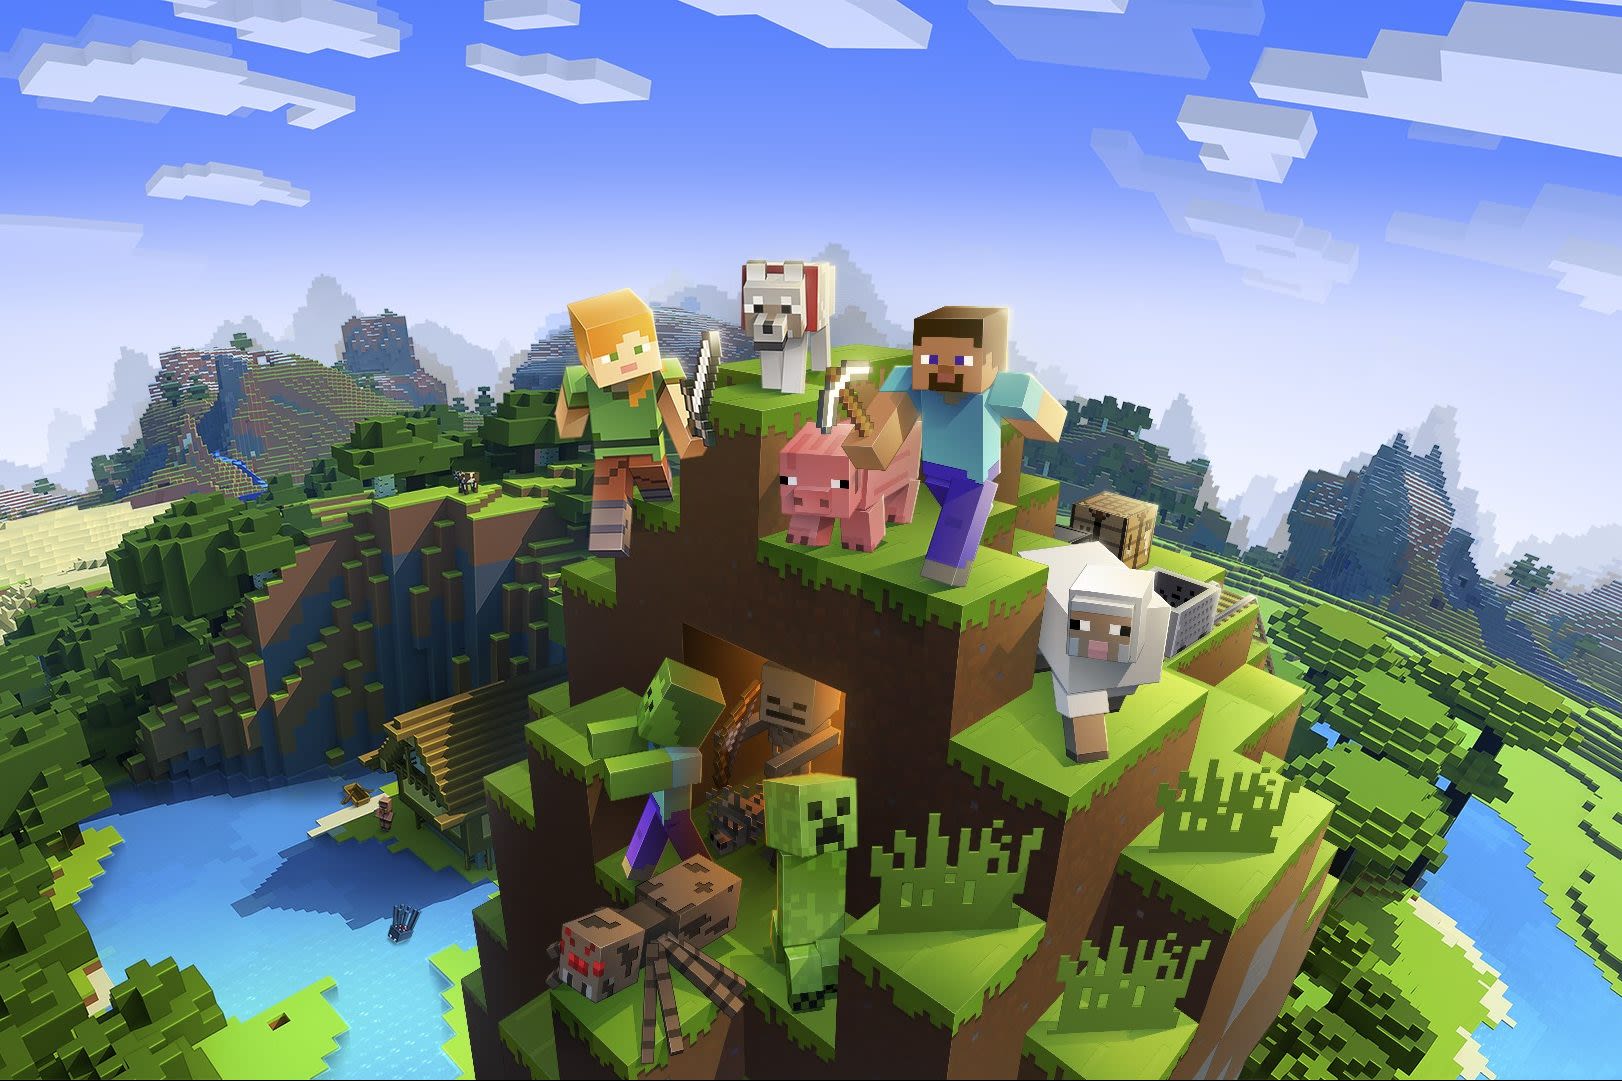 Minecraft animated series in development at Netflix